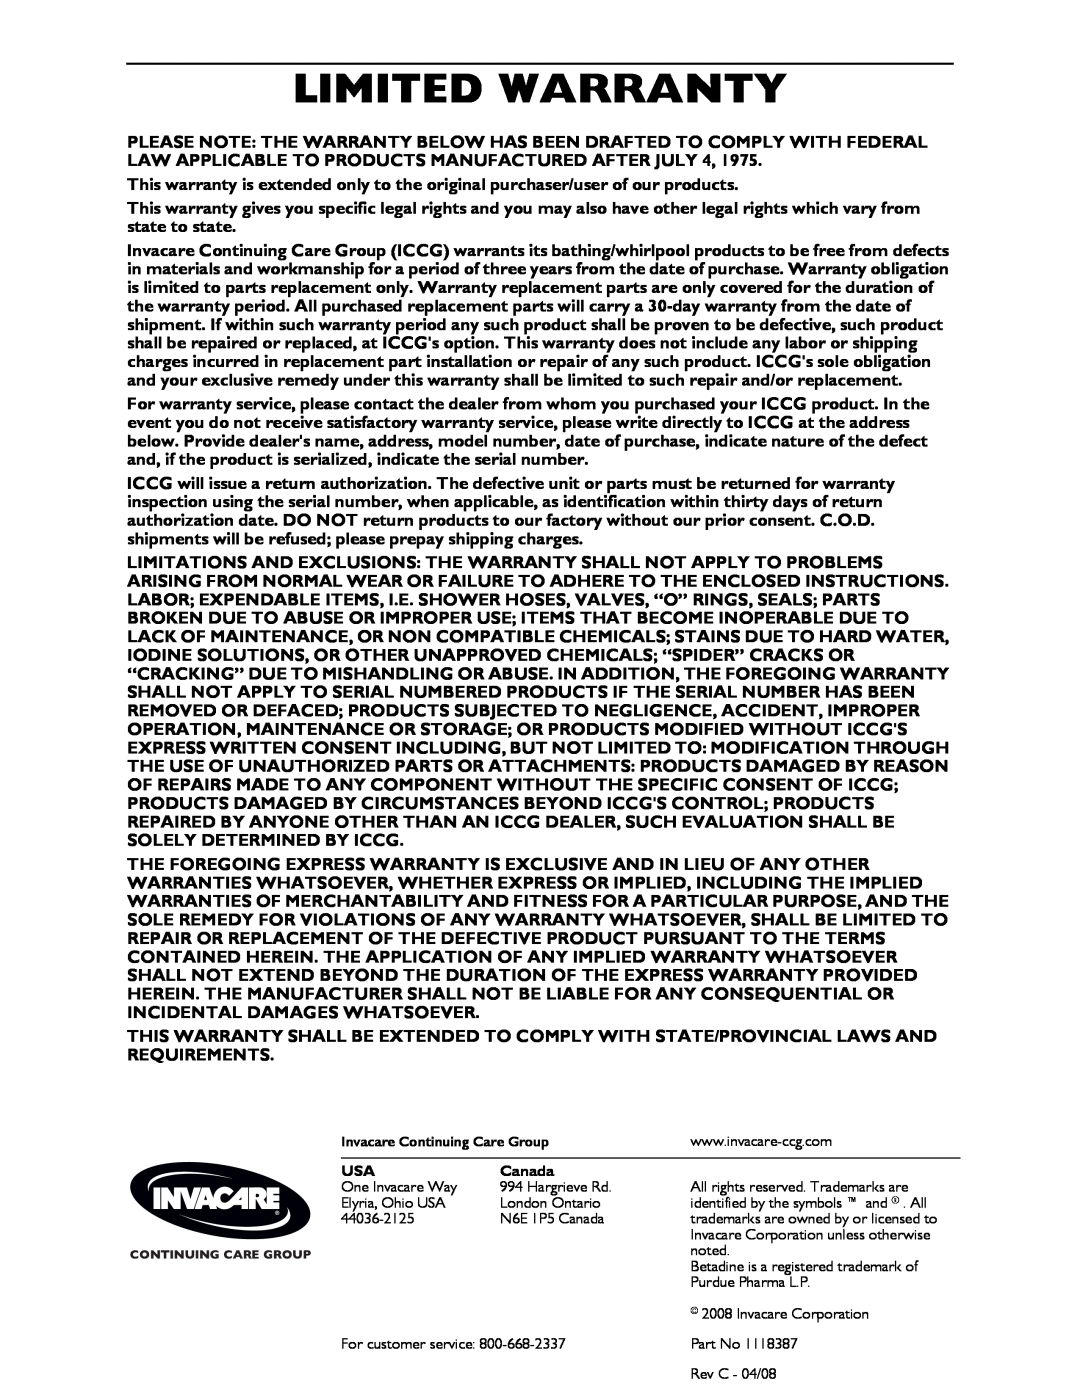 Invacare 3650 manual Limited Warranty, Canada 